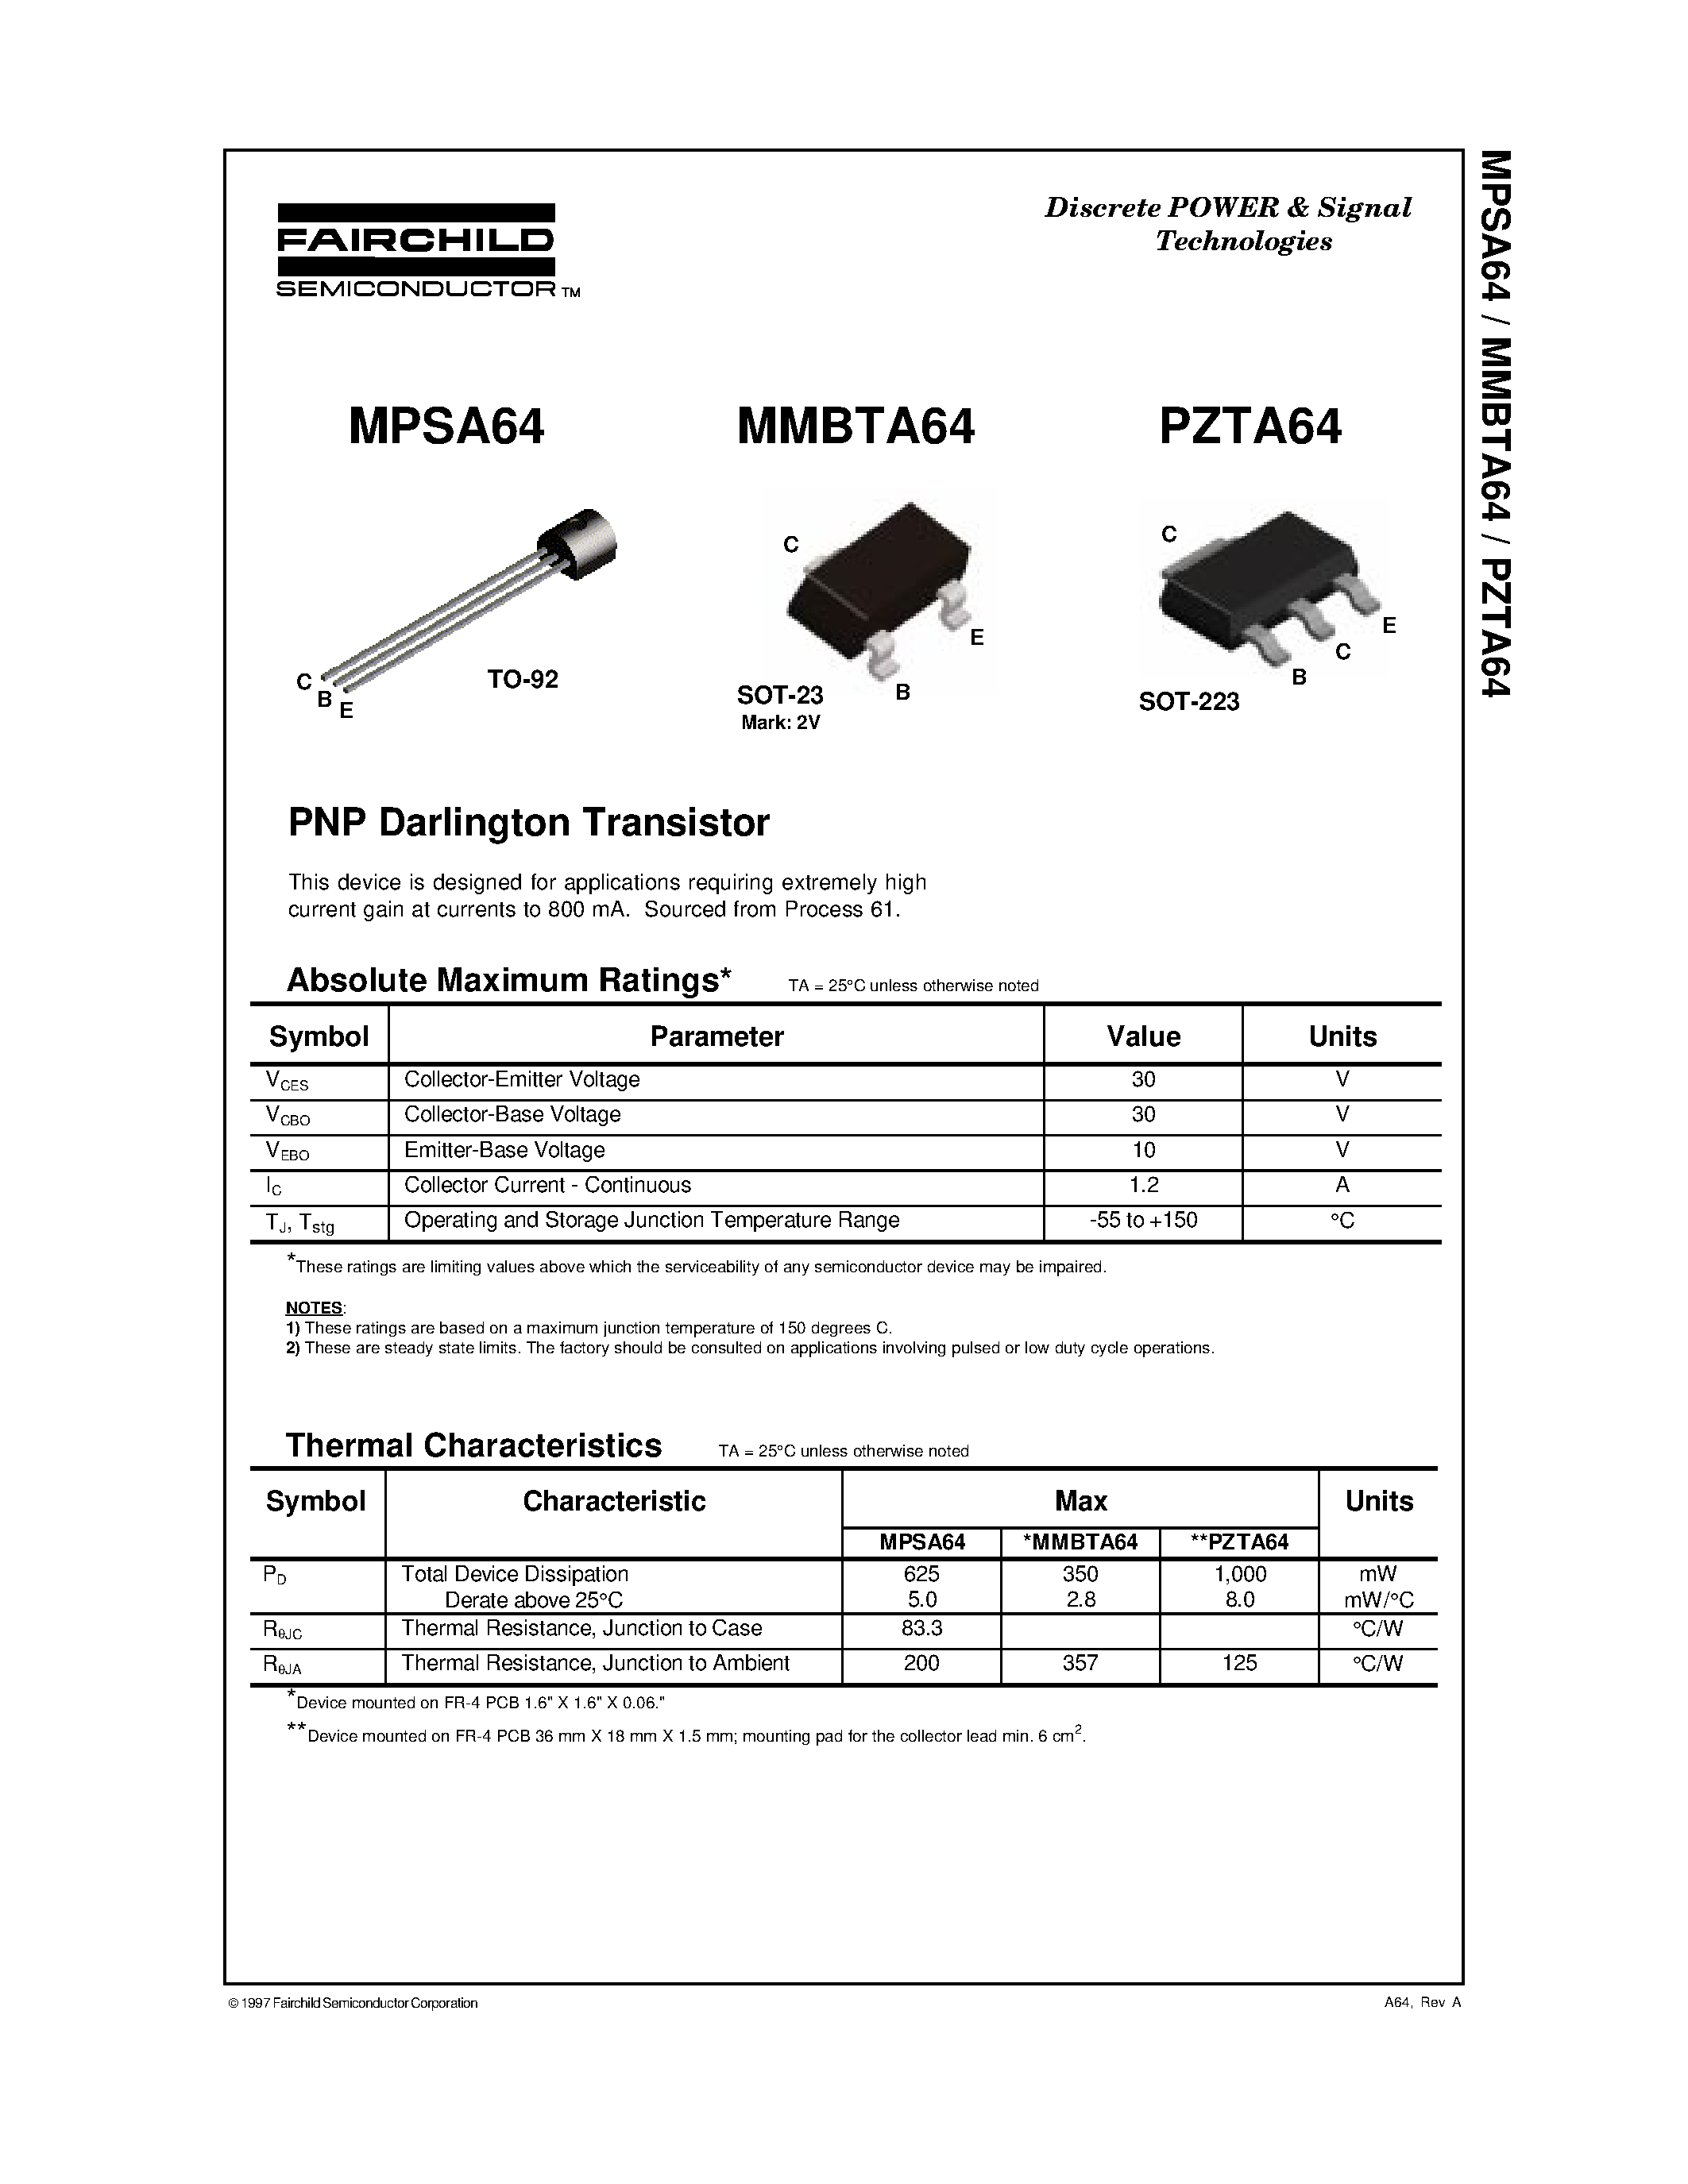 Datasheet PZTA64 - PNP Darlington Transistor page 1